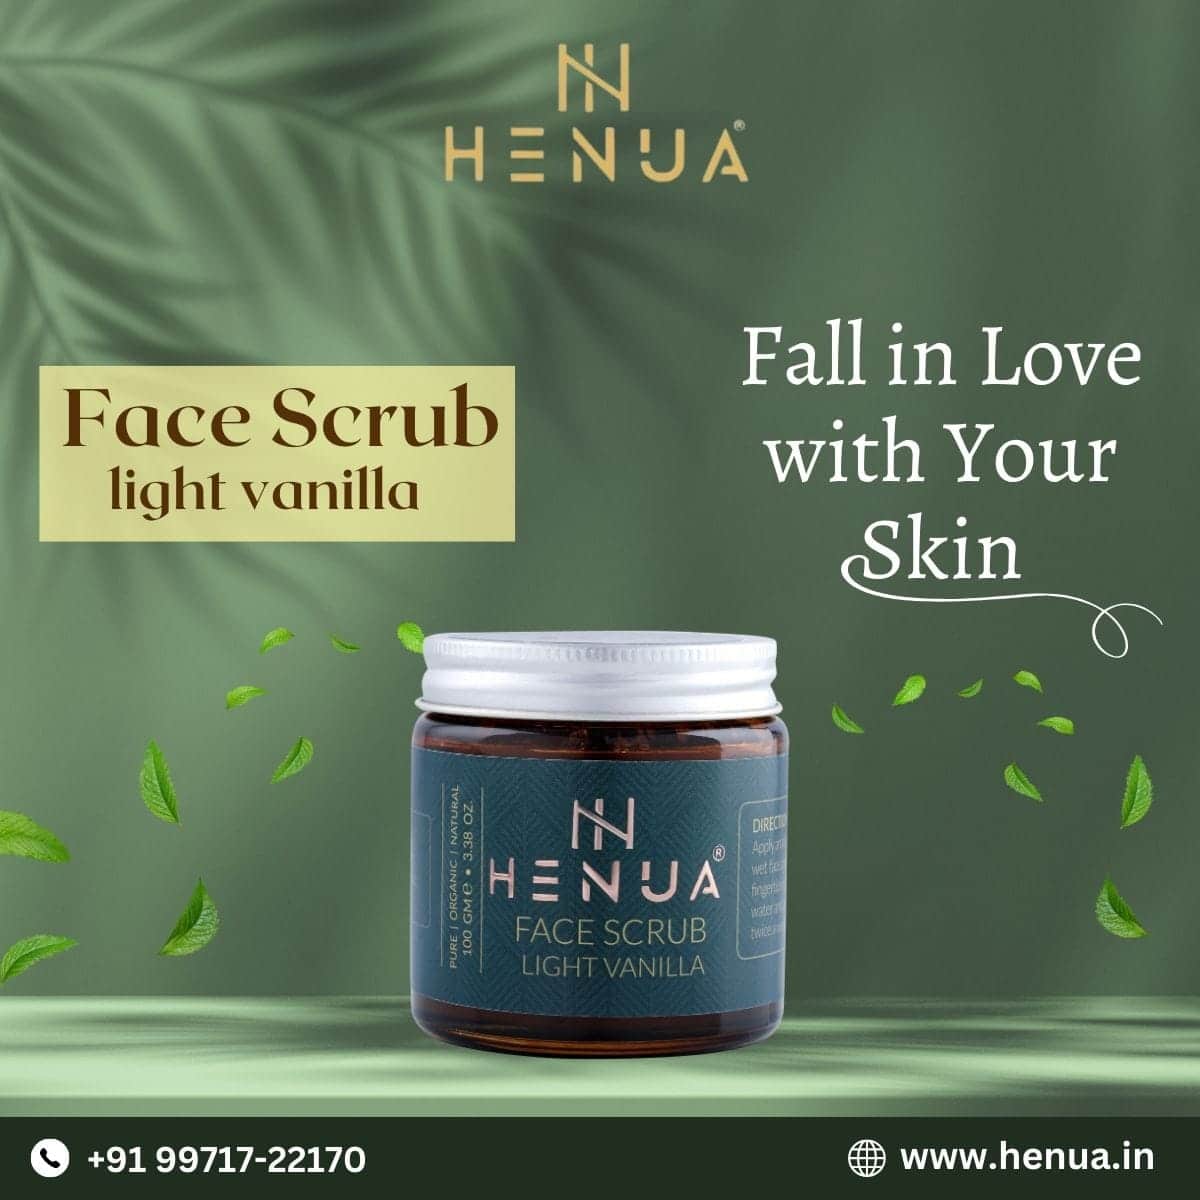 With-Henua-Face-Scrub-Do-Care-Of-Your-Face-Light-Vanilla